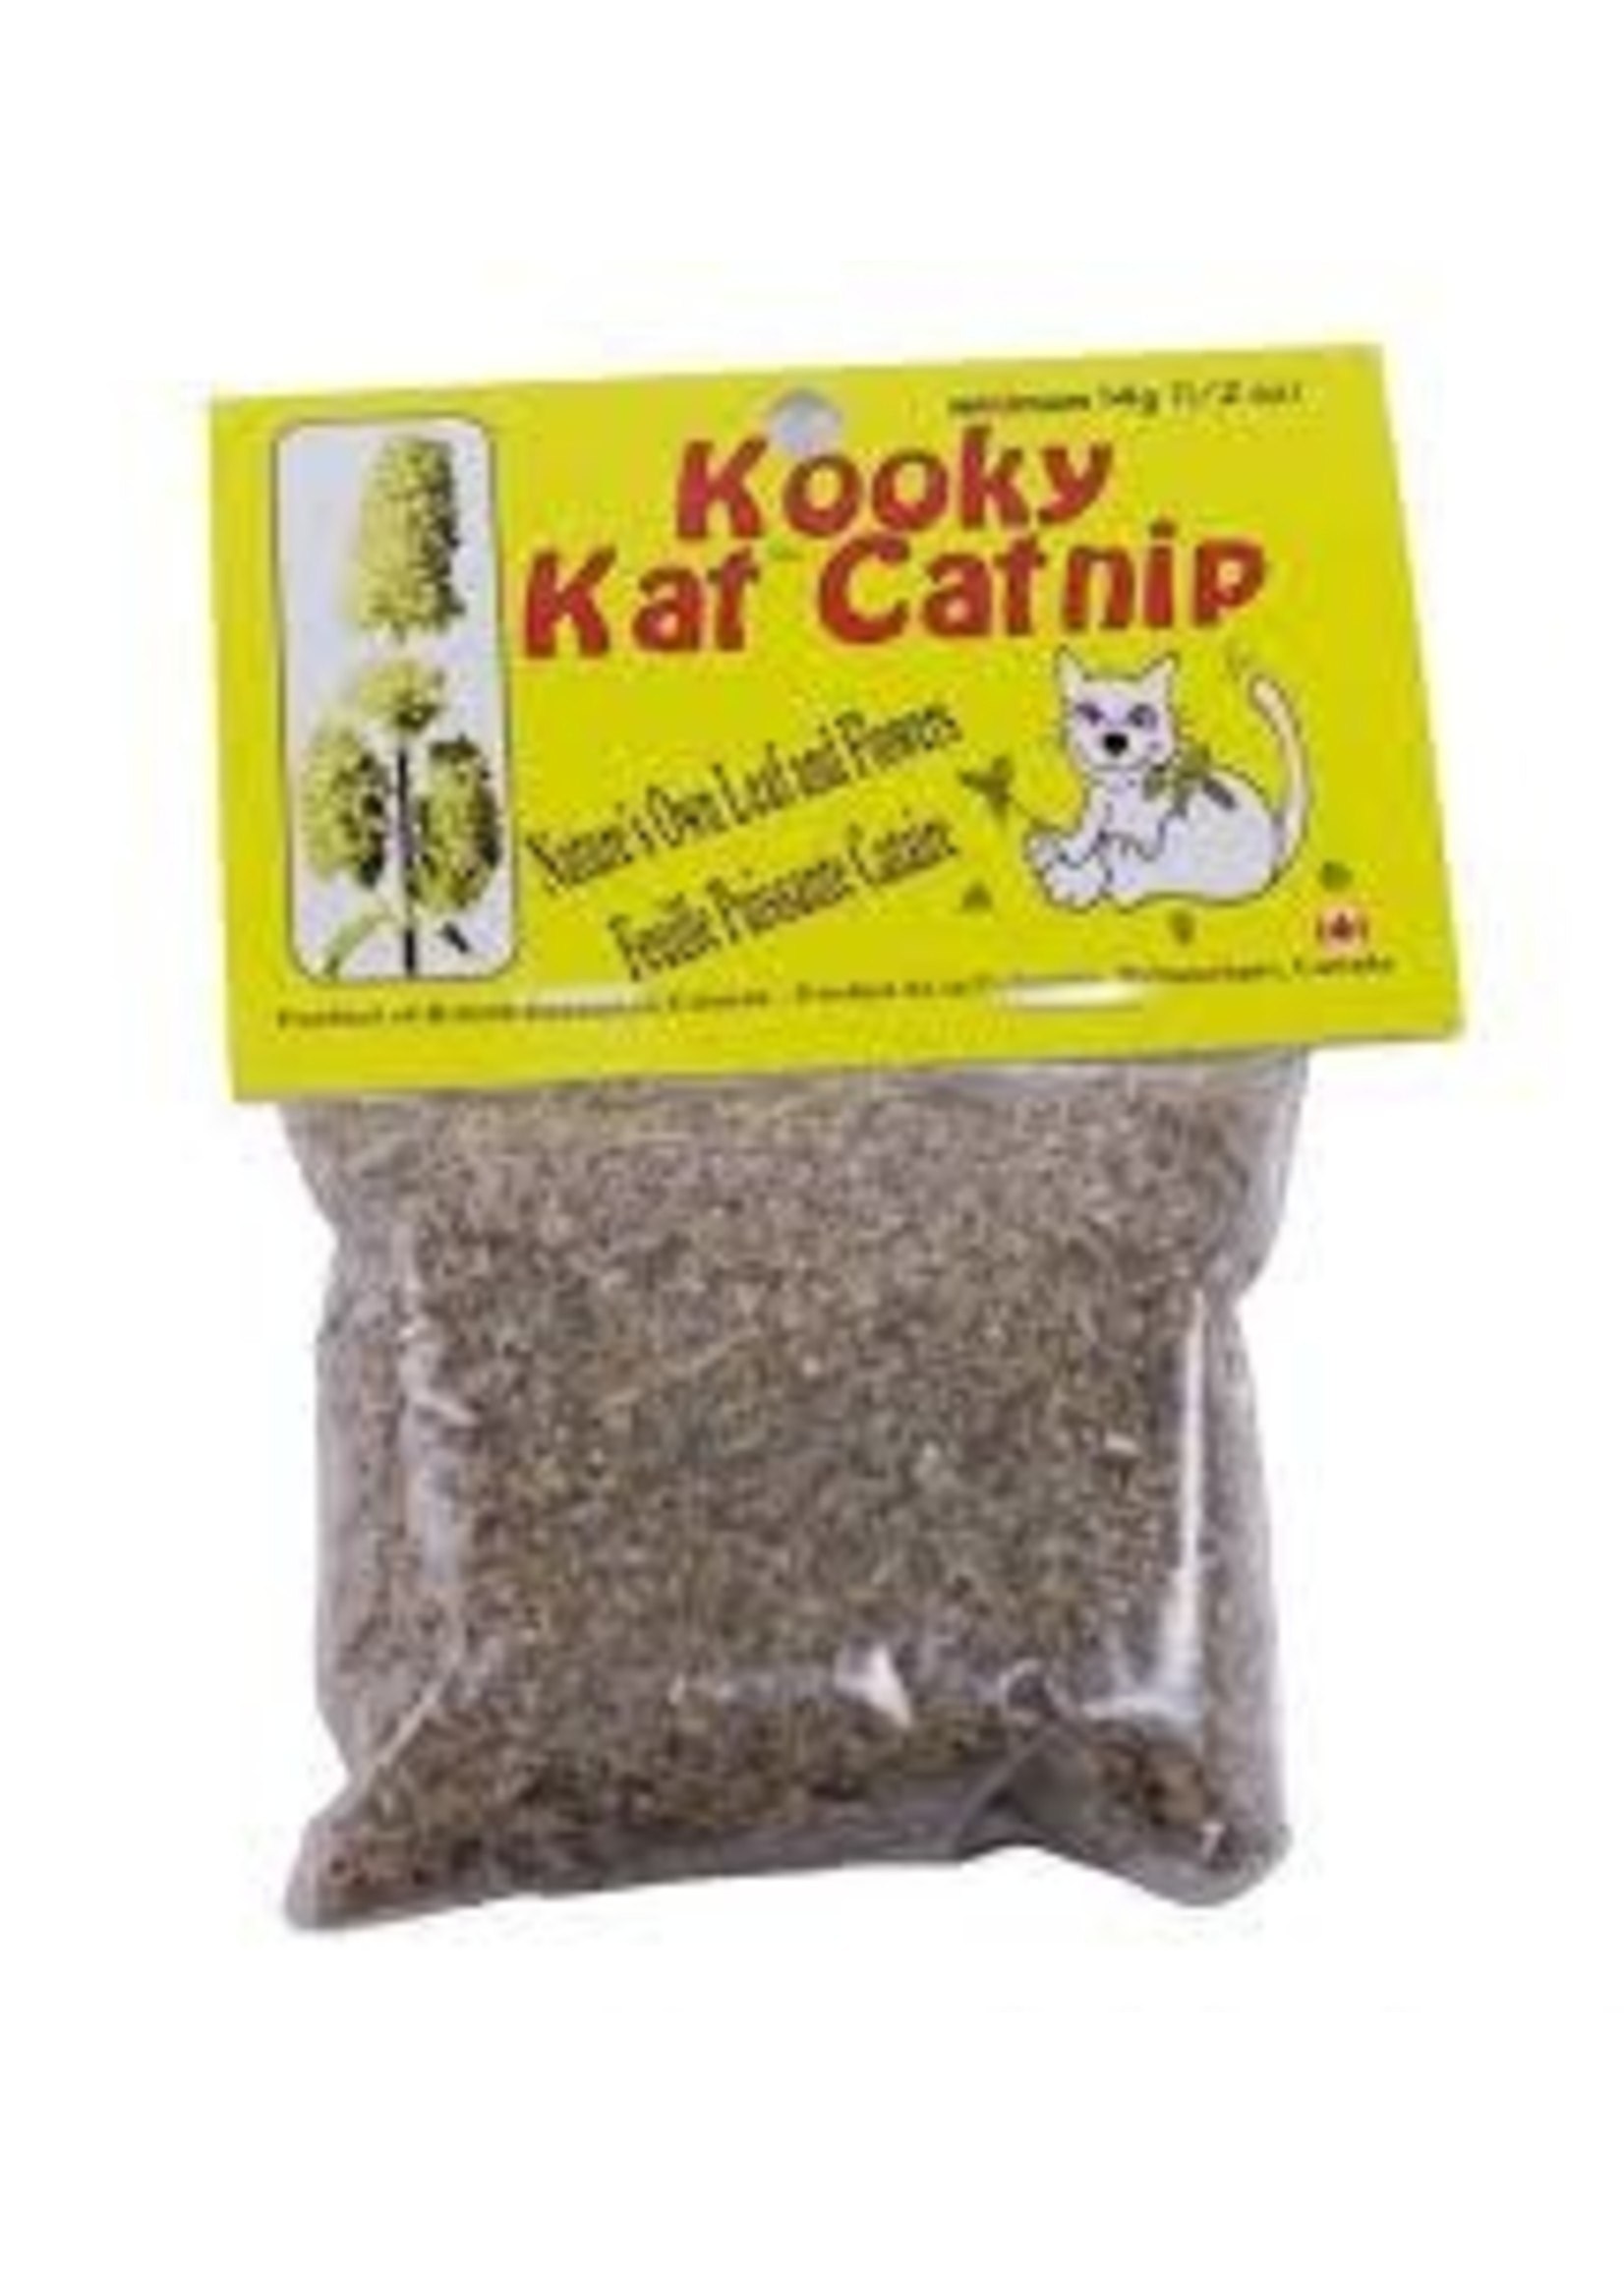 Kooky Kat Catnip Kooky Cat Catnip - Leaf & Flower Bag 14g